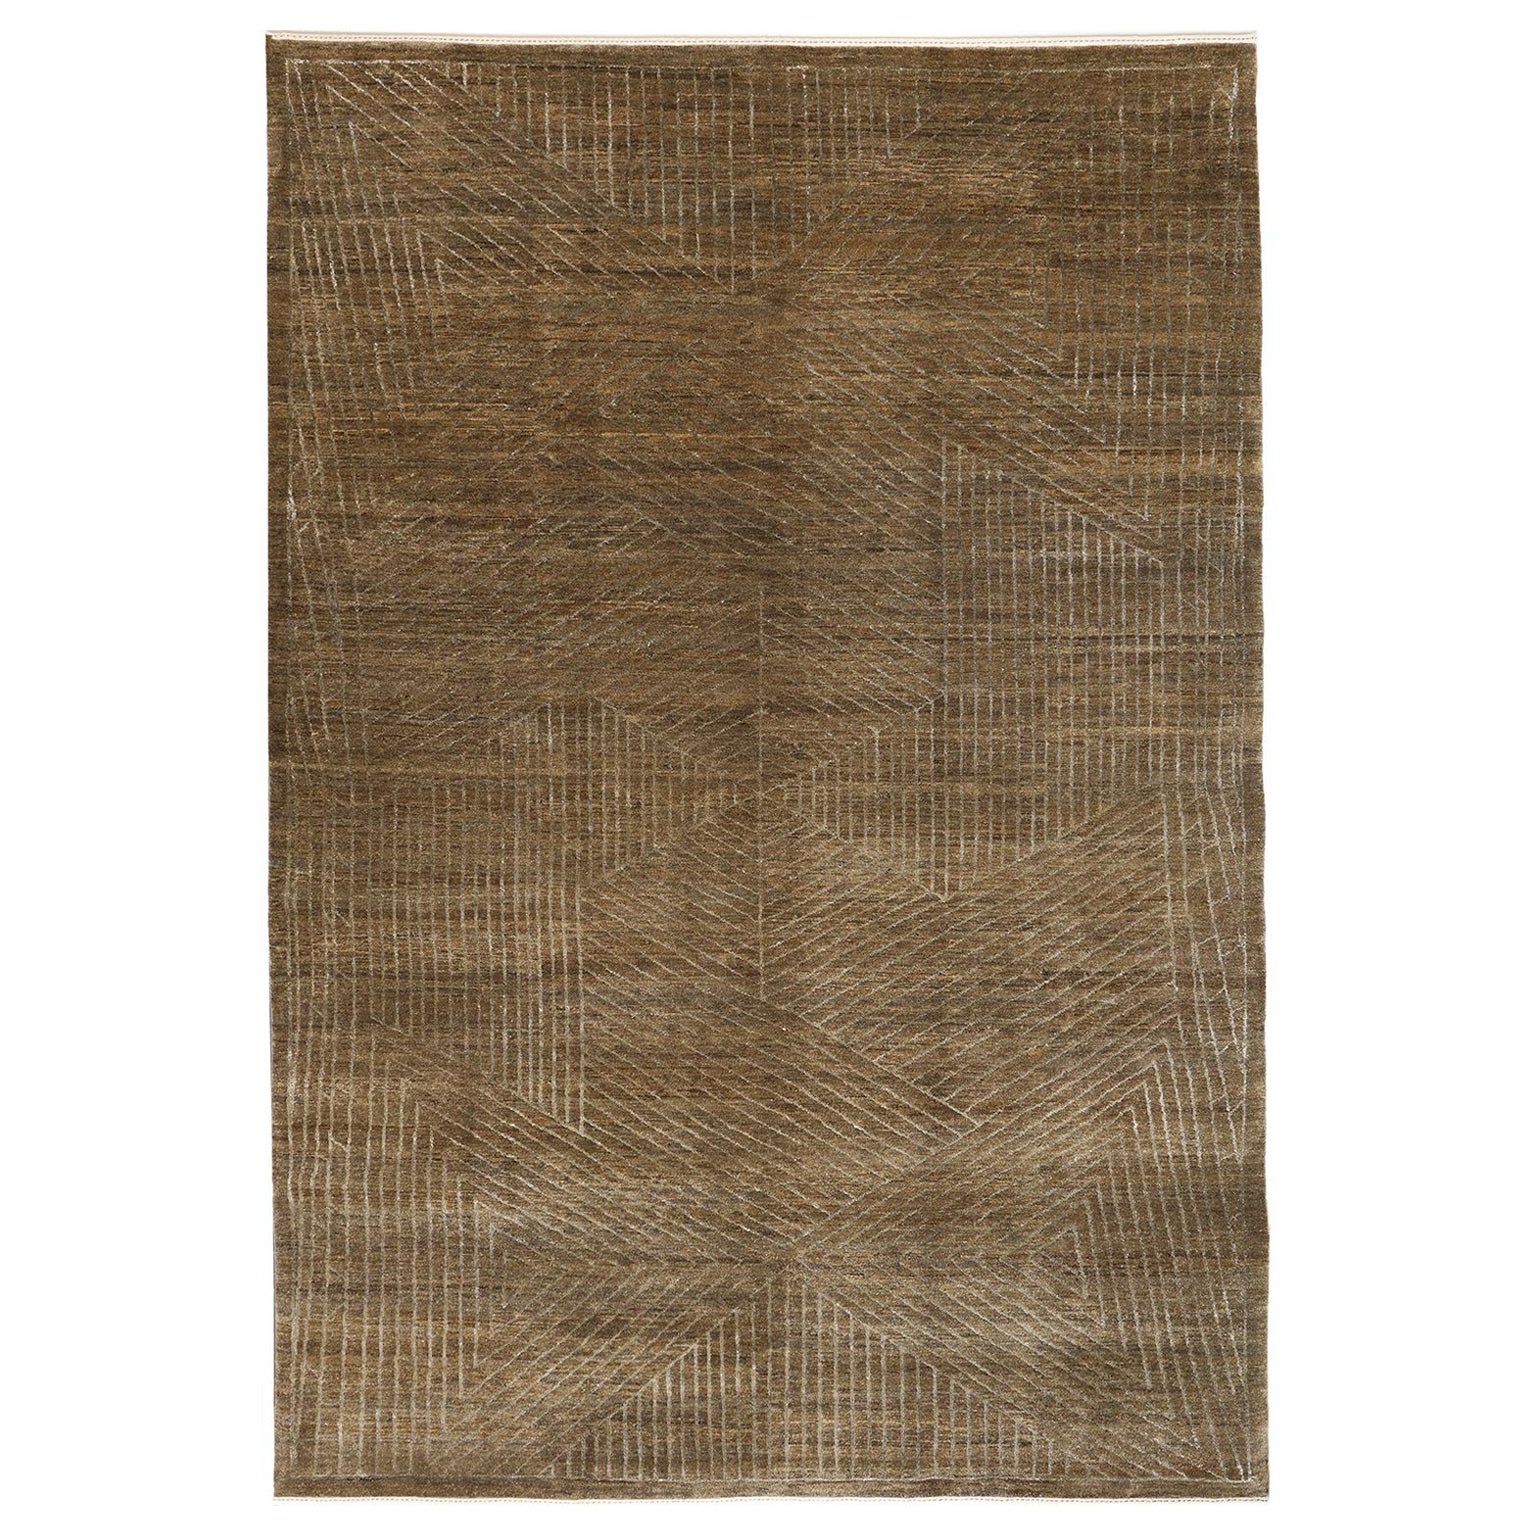 Orley Shabahang "Khesht" Contemporary Persian Rug, Wool and Silk, Brown, 6' x 9'